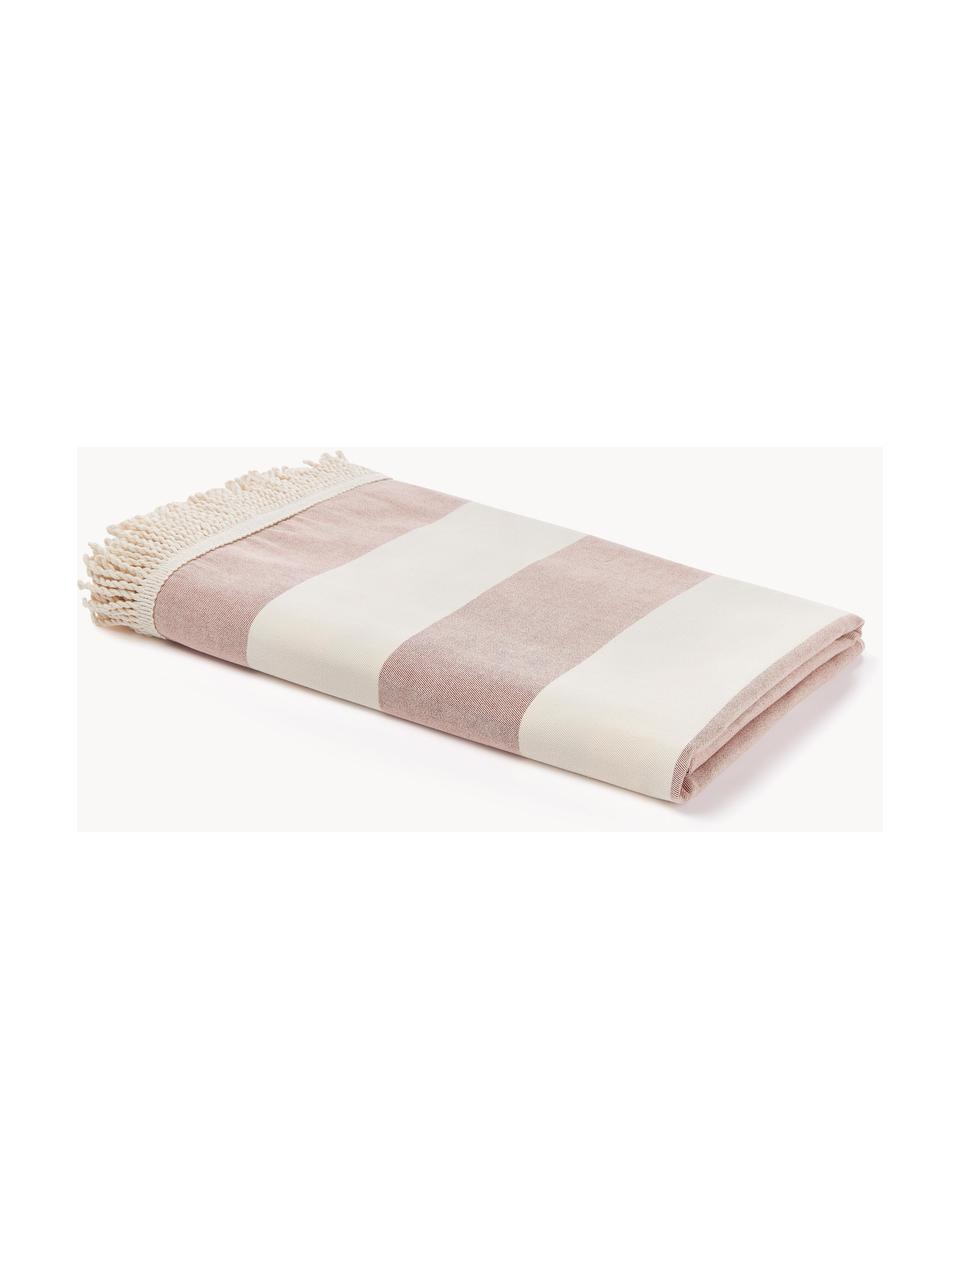 Set de toallas texturizadas Yara, 3 uds., Tonos rosas, gris, beige, An 100 x L 180 cm